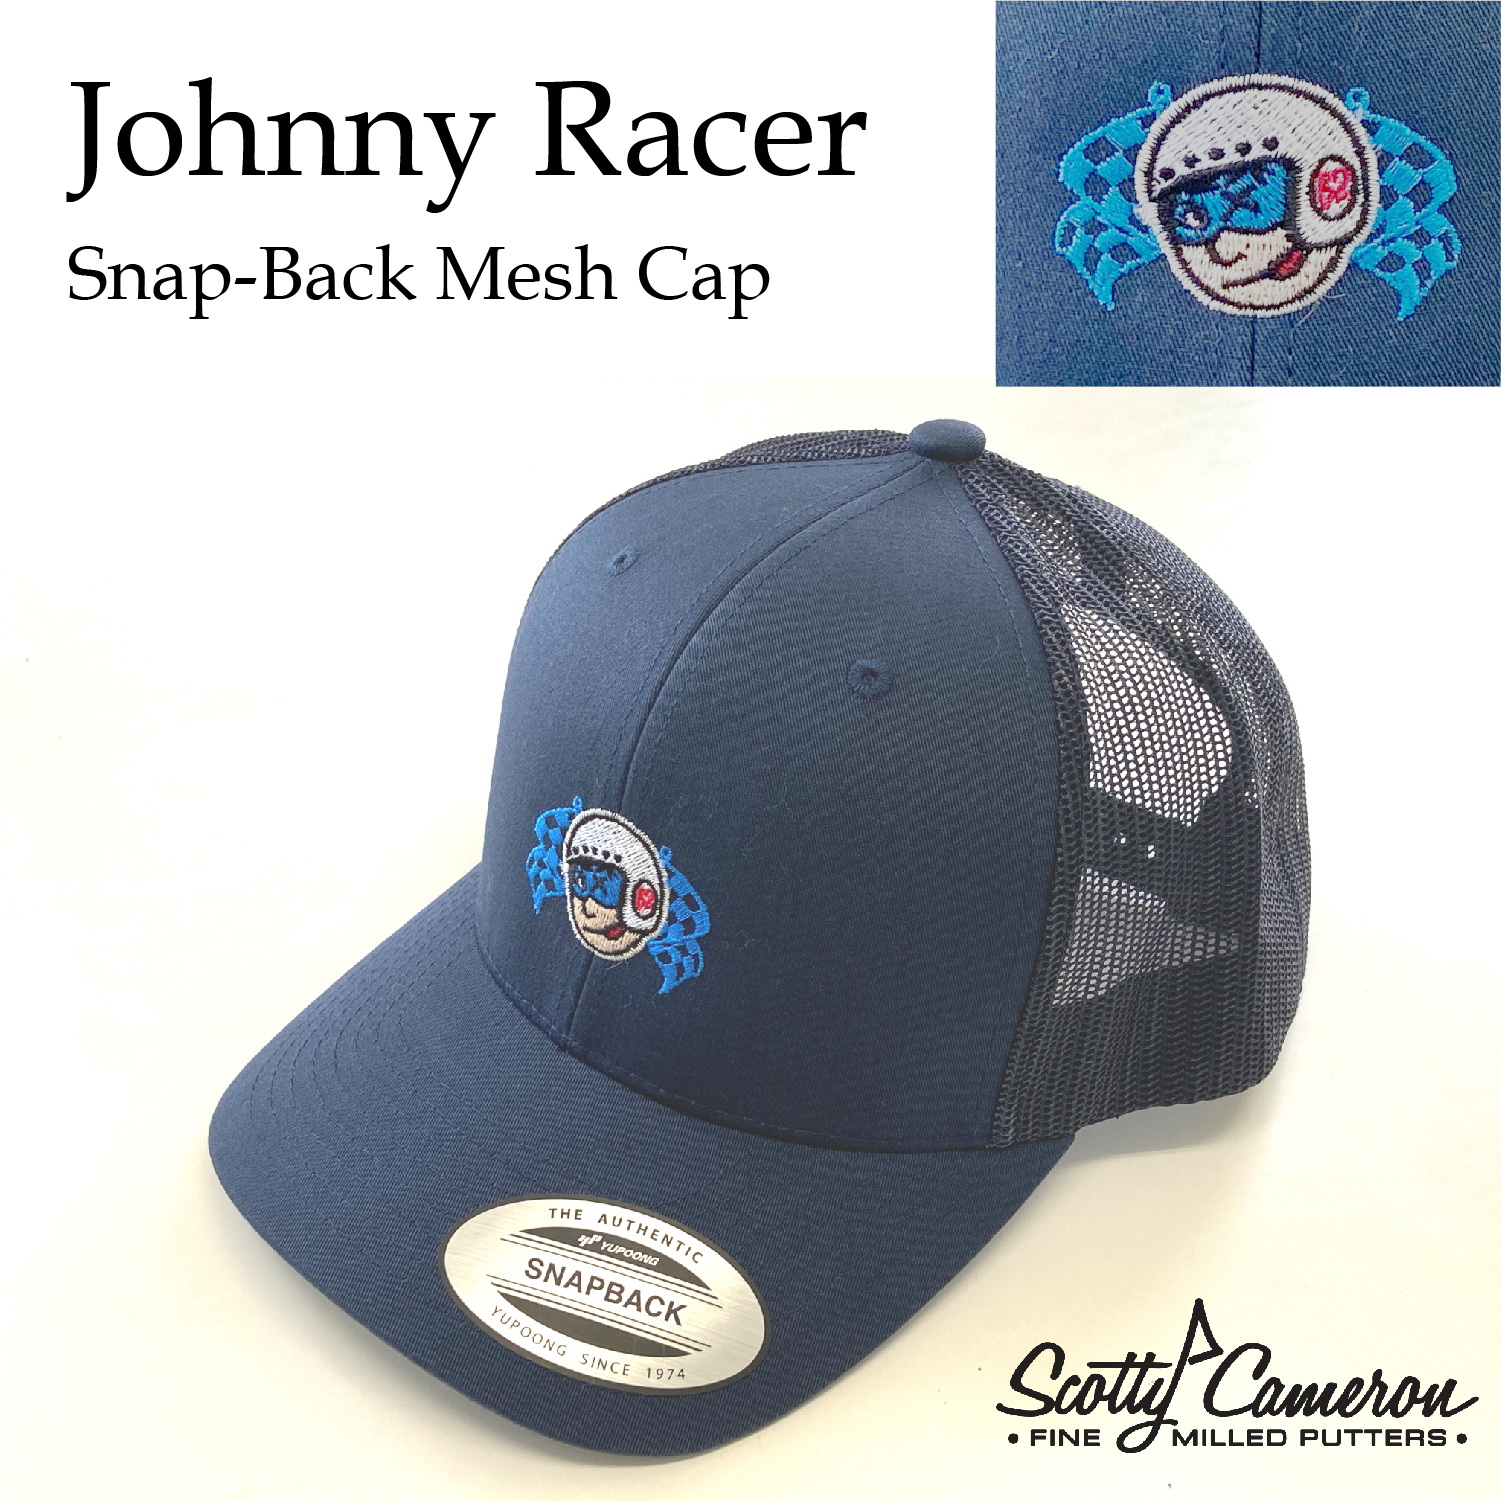 Scotty Cameron Johnny Racer Snap-Back Mesh Cap Navy